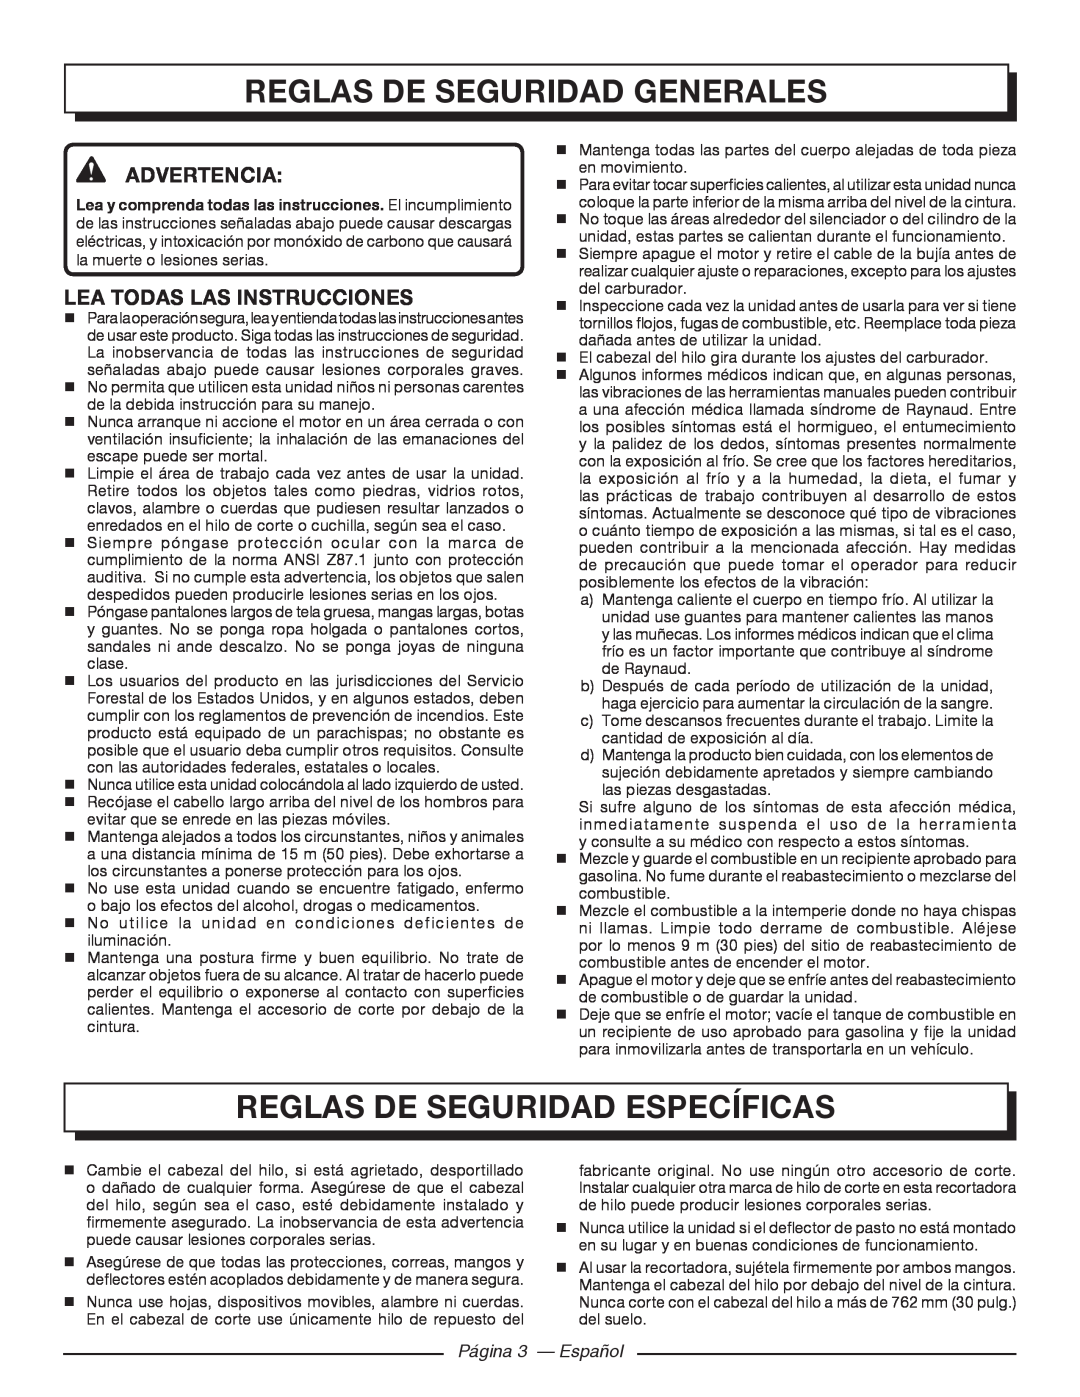 Homelite 26CS UT22600 Reglas De Seguridad Generales, Reglas De Seguridad Específicas, Advertencia, Página 3 - Español 